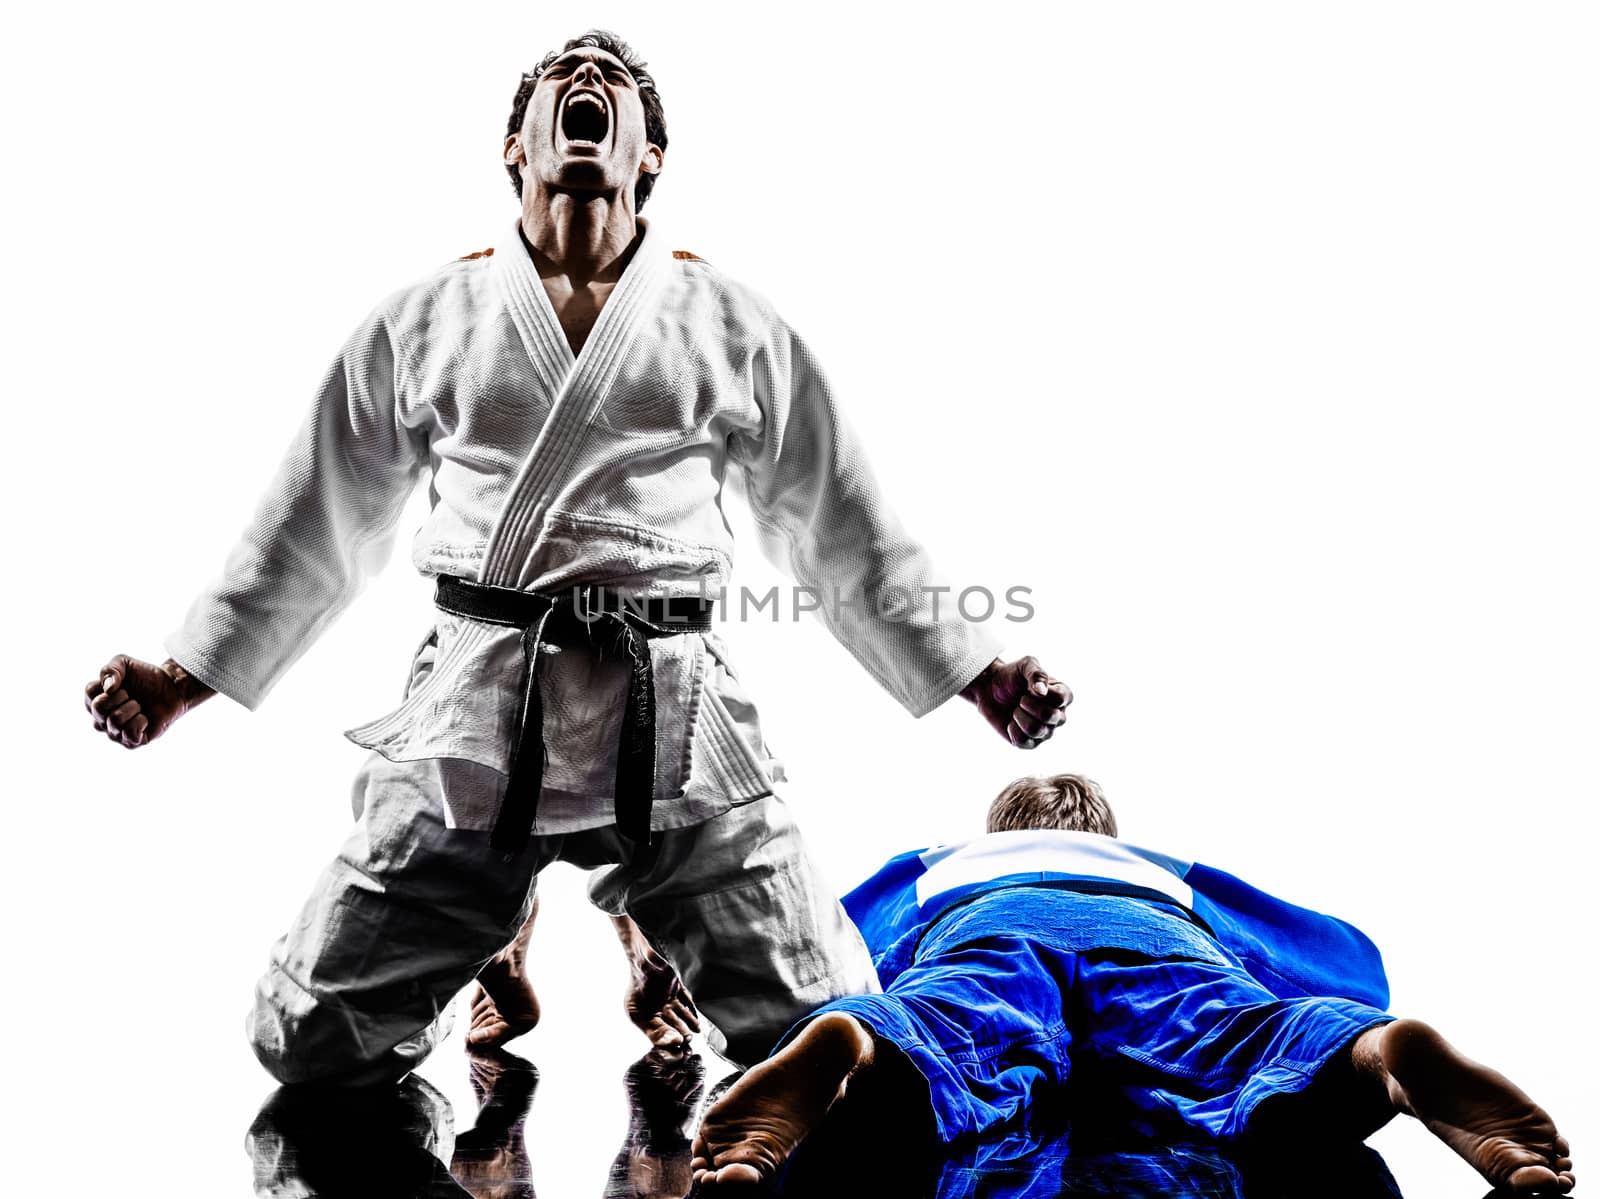 judokas fighters fighting men silhouettes by PIXSTILL